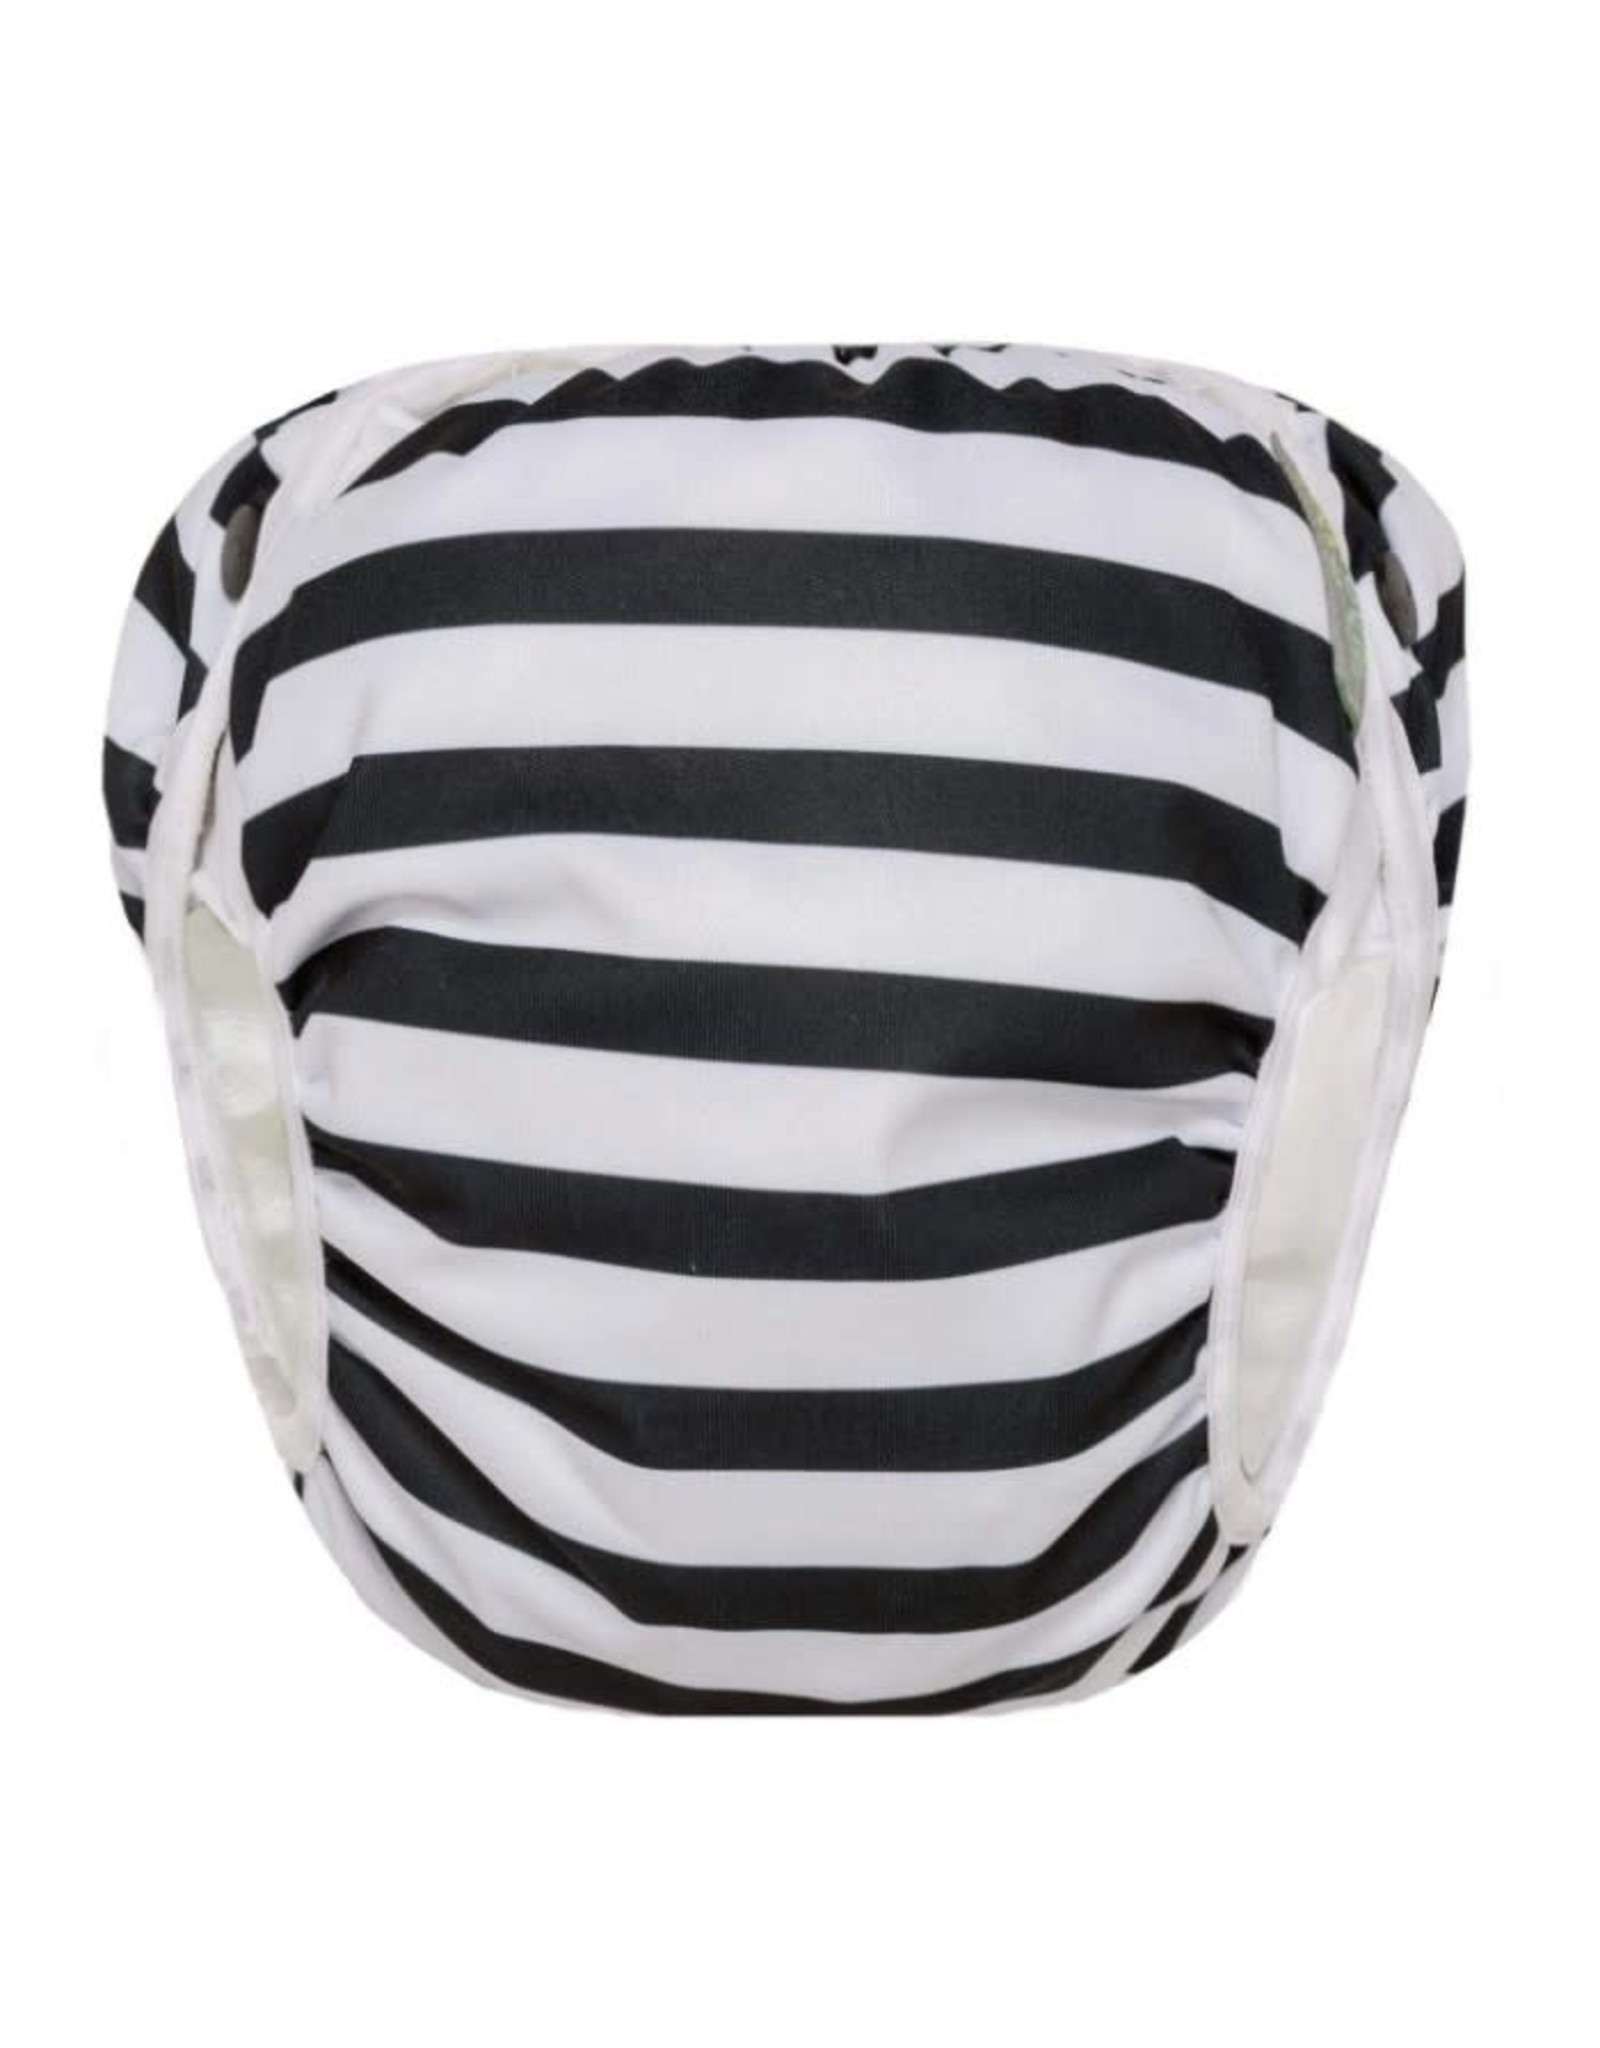 Swim Diaper in Oynx Stripe Size 3 (25-50 lbs)